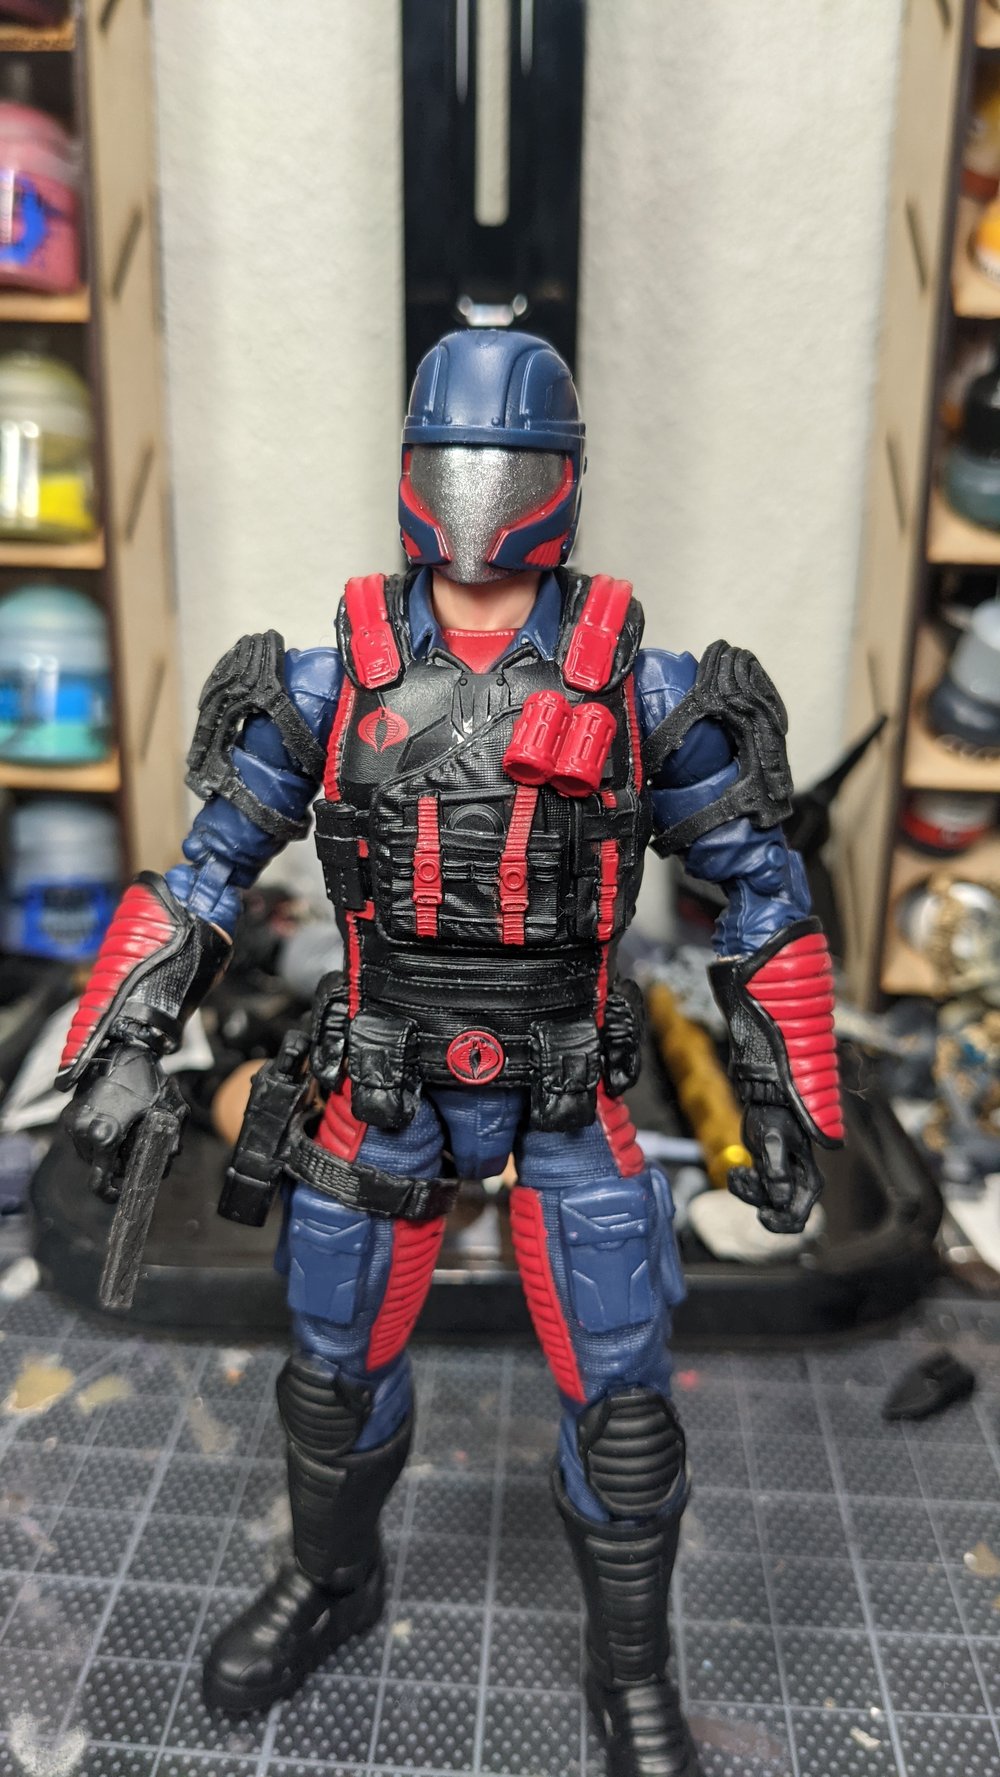 Cobra shoulder armor